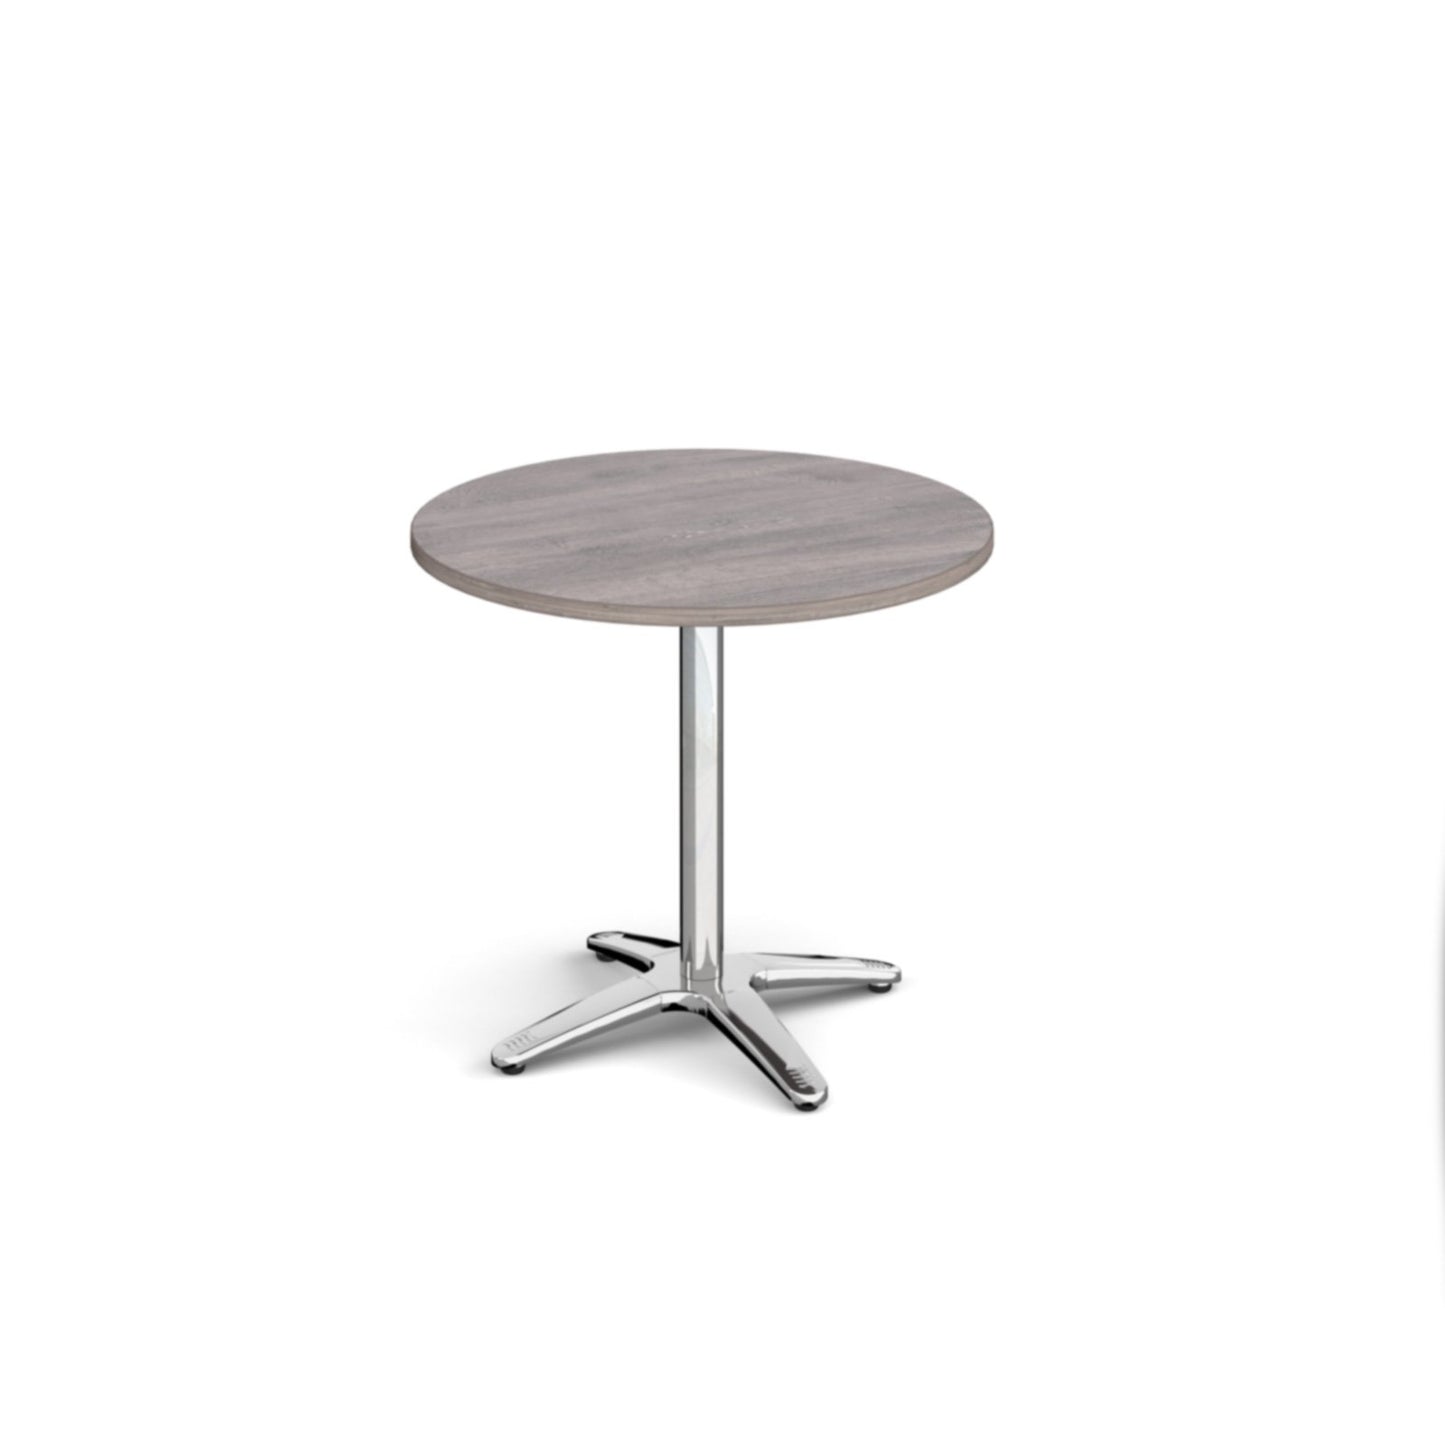 Roma circular dining table with 4 leg base